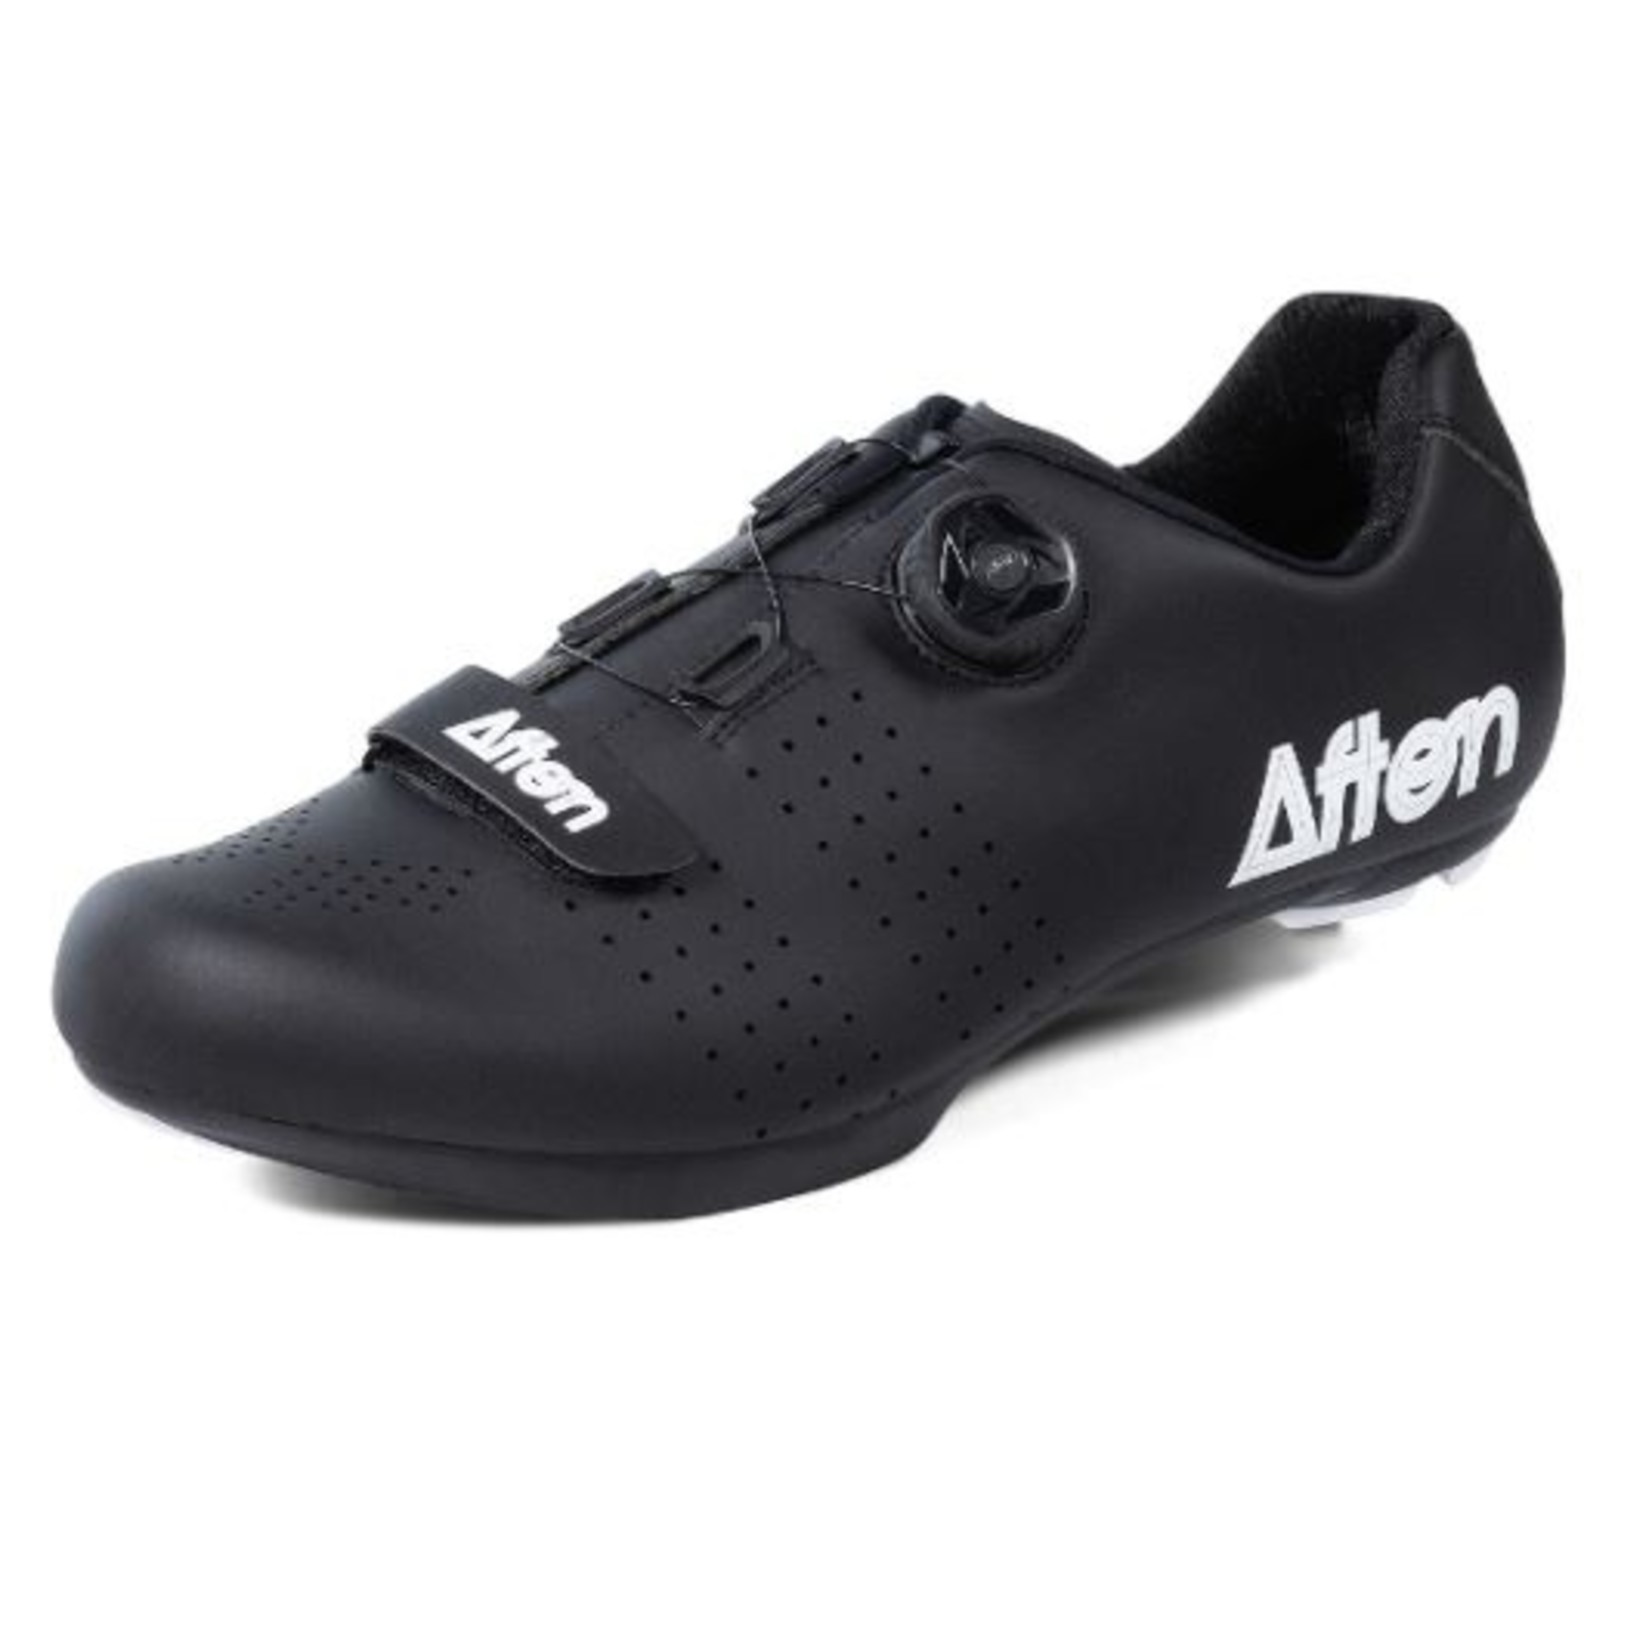 Afton Road Gravel Cycling Shoes - Royce - Black/White